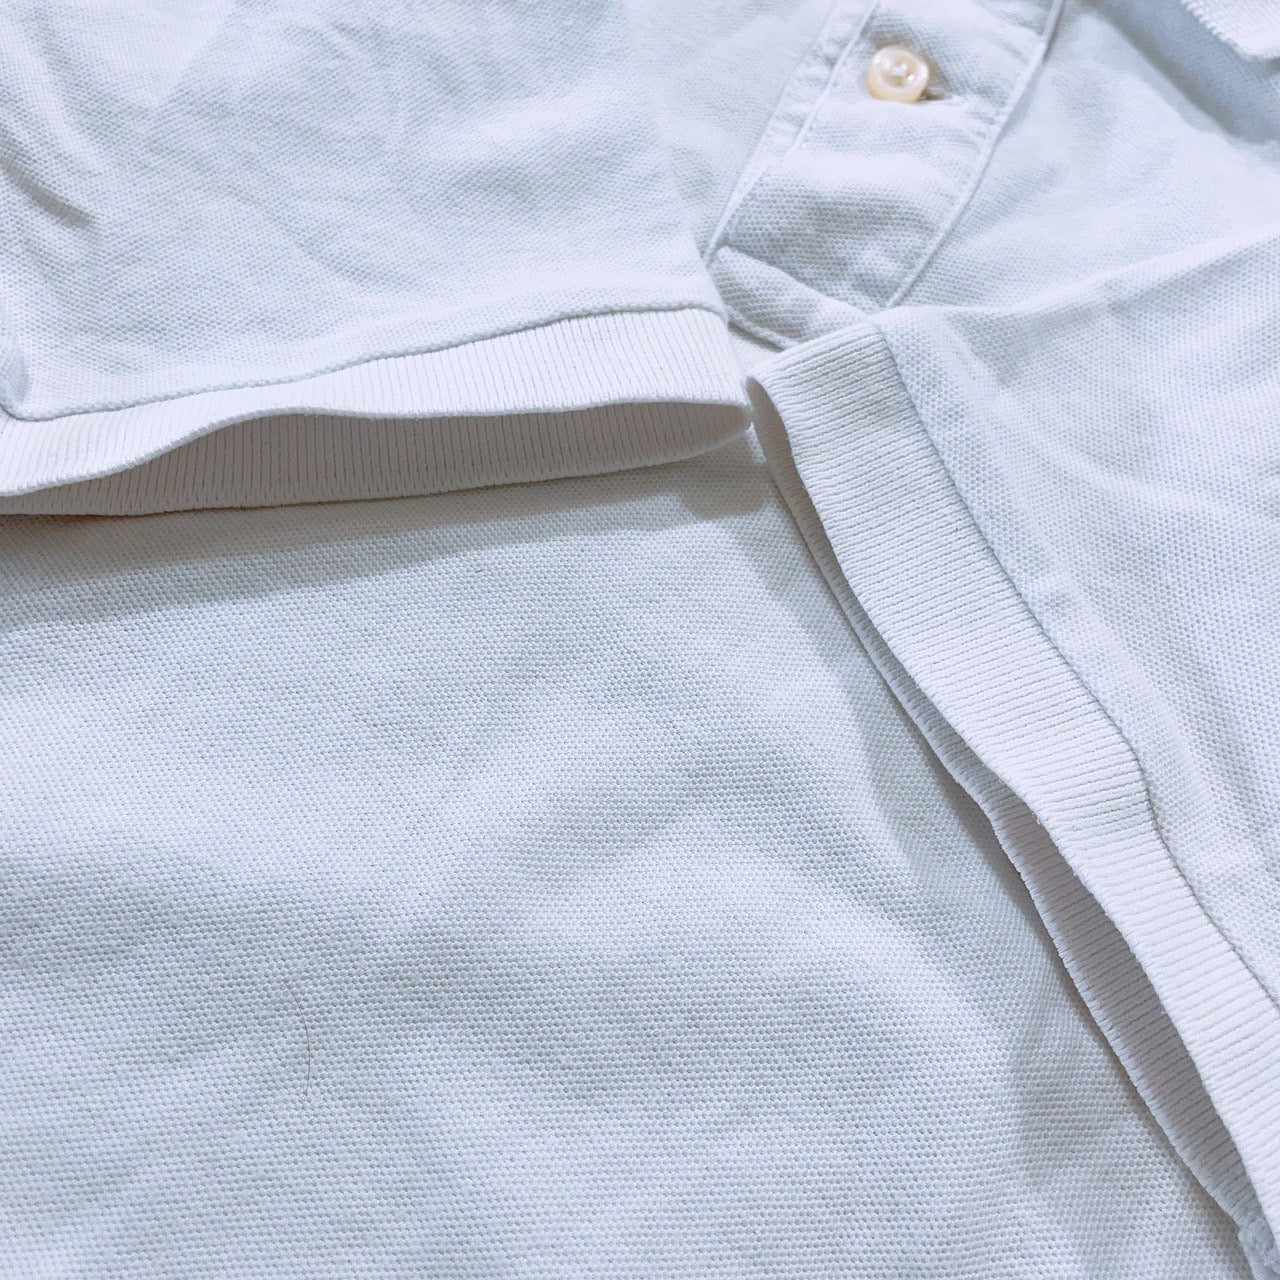 【25569】 McGregor マックレガー ポロシャツ カットソー サイズM ホワイト カジュアルシャツ 半袖 ハーフボタン ロゴマーク メンズ